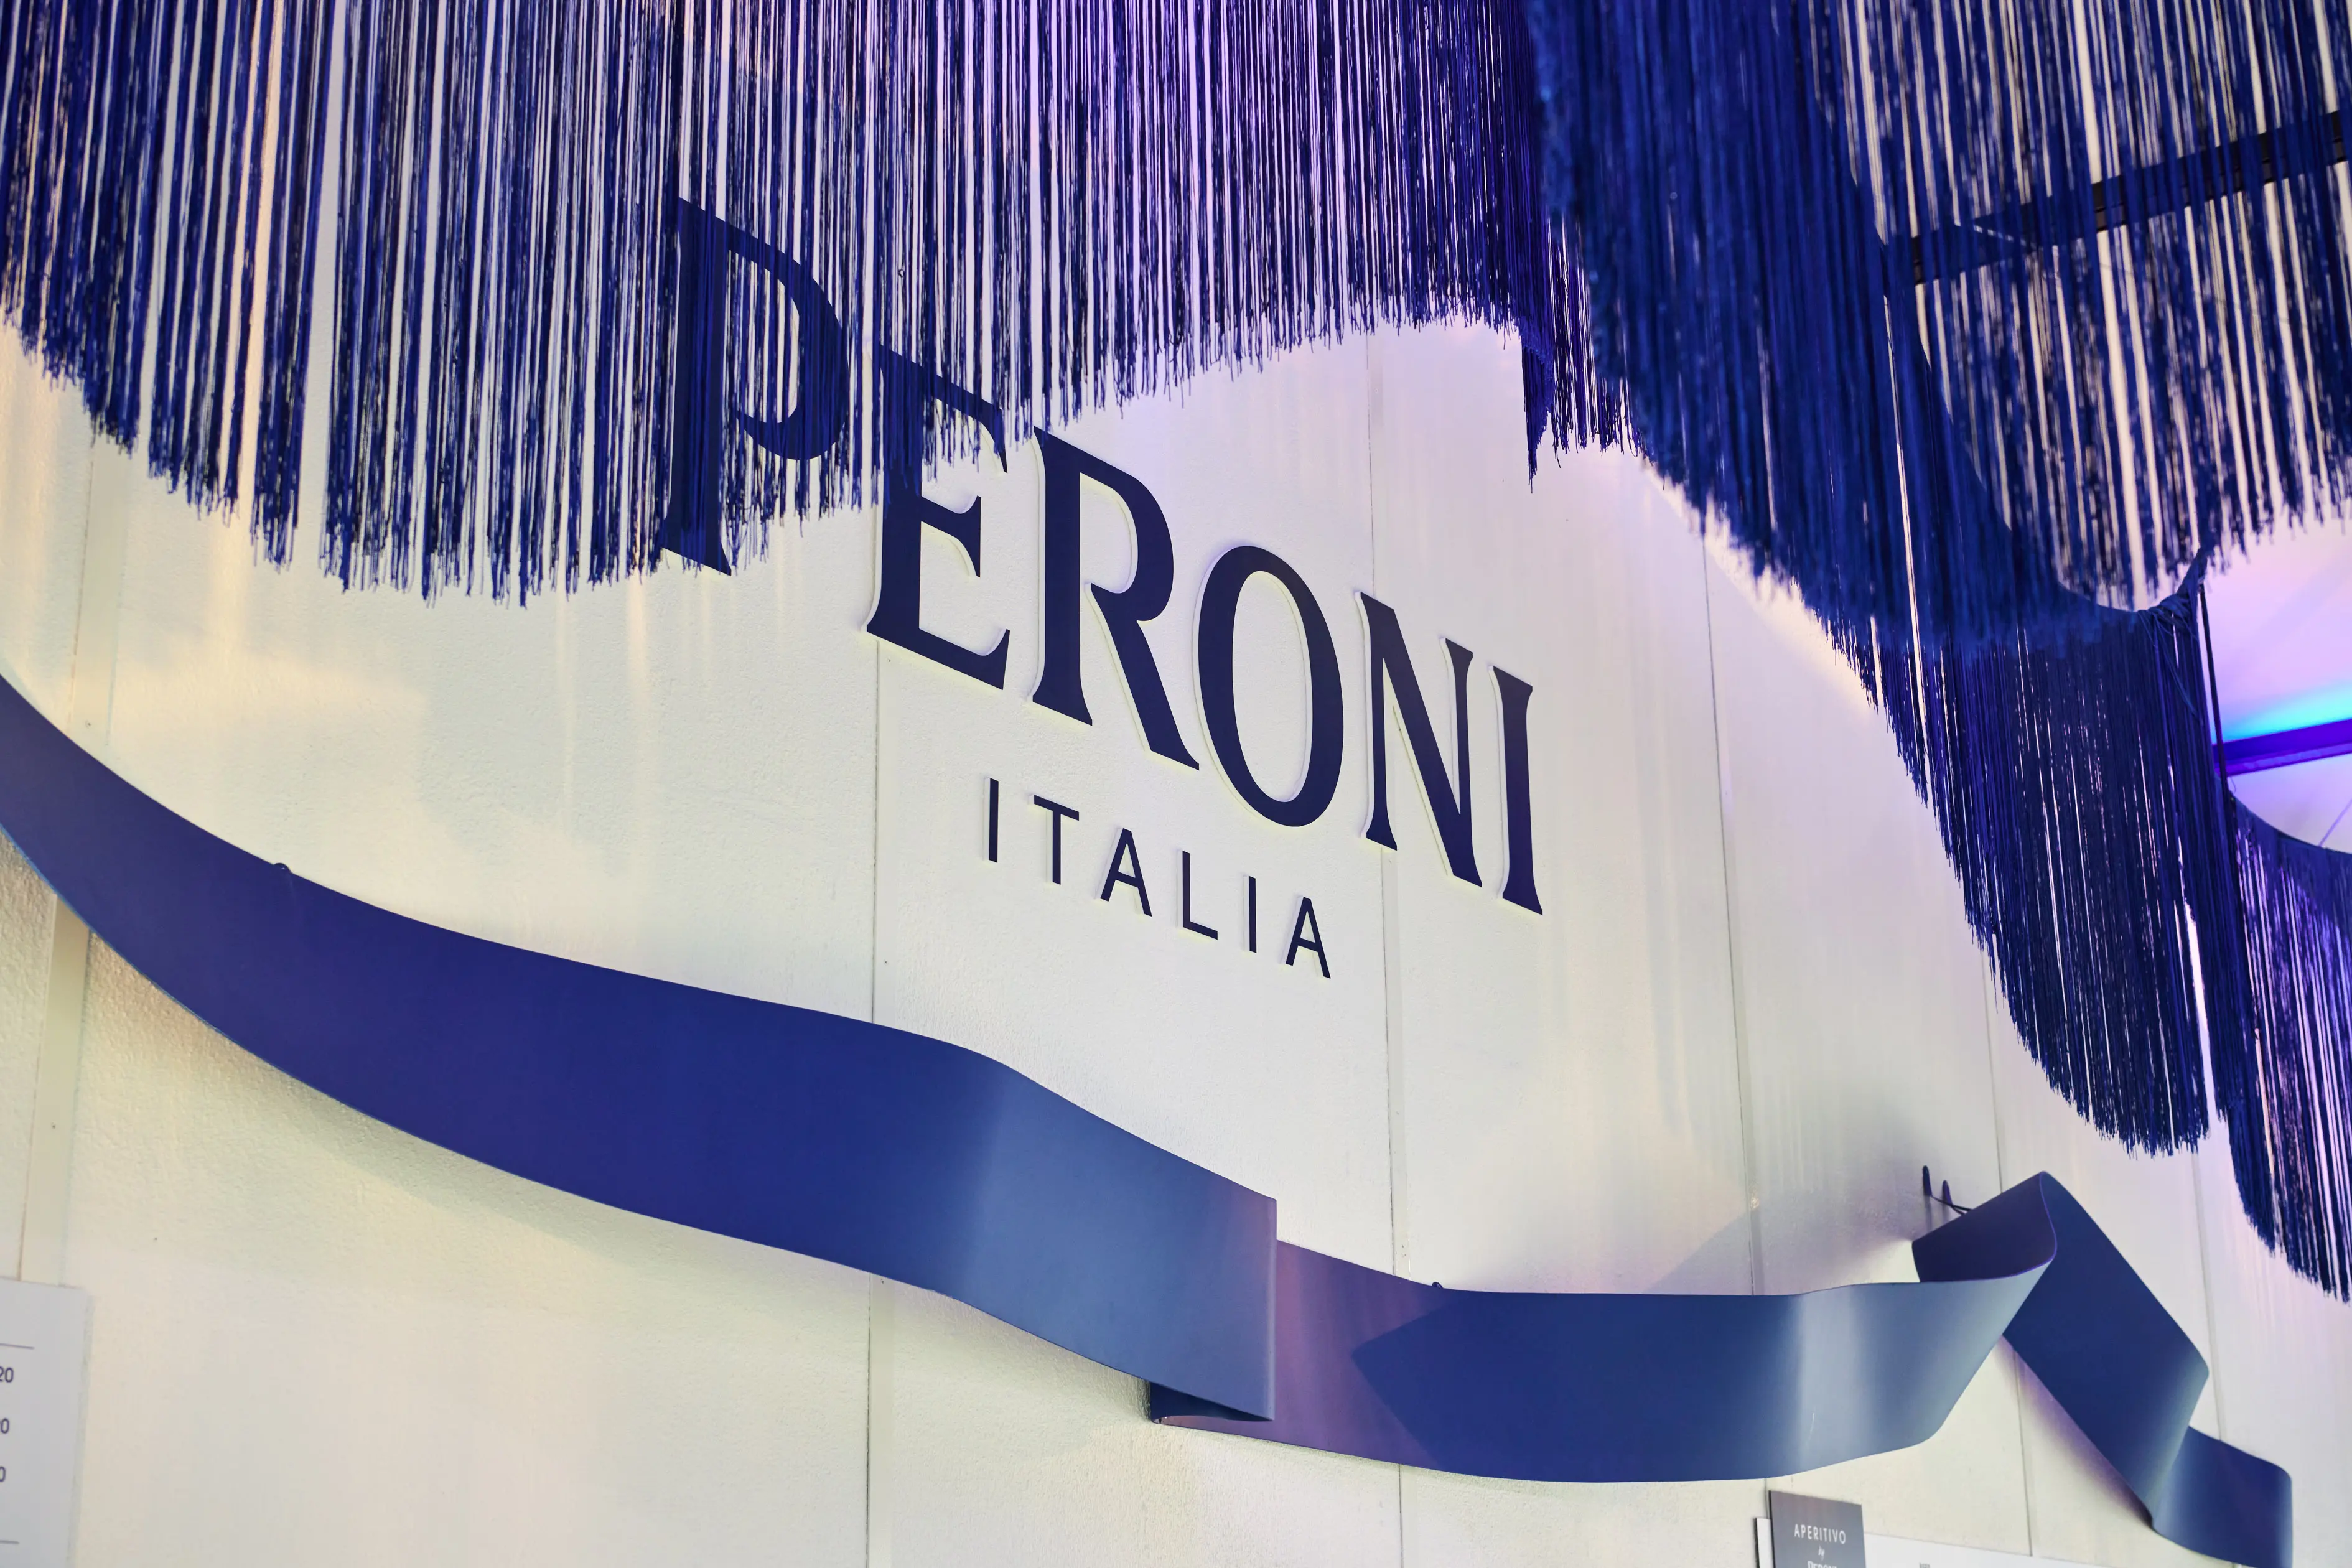 Peroni Australian Open - brand activation, event production, fabrication and build - Melbourne, Australia